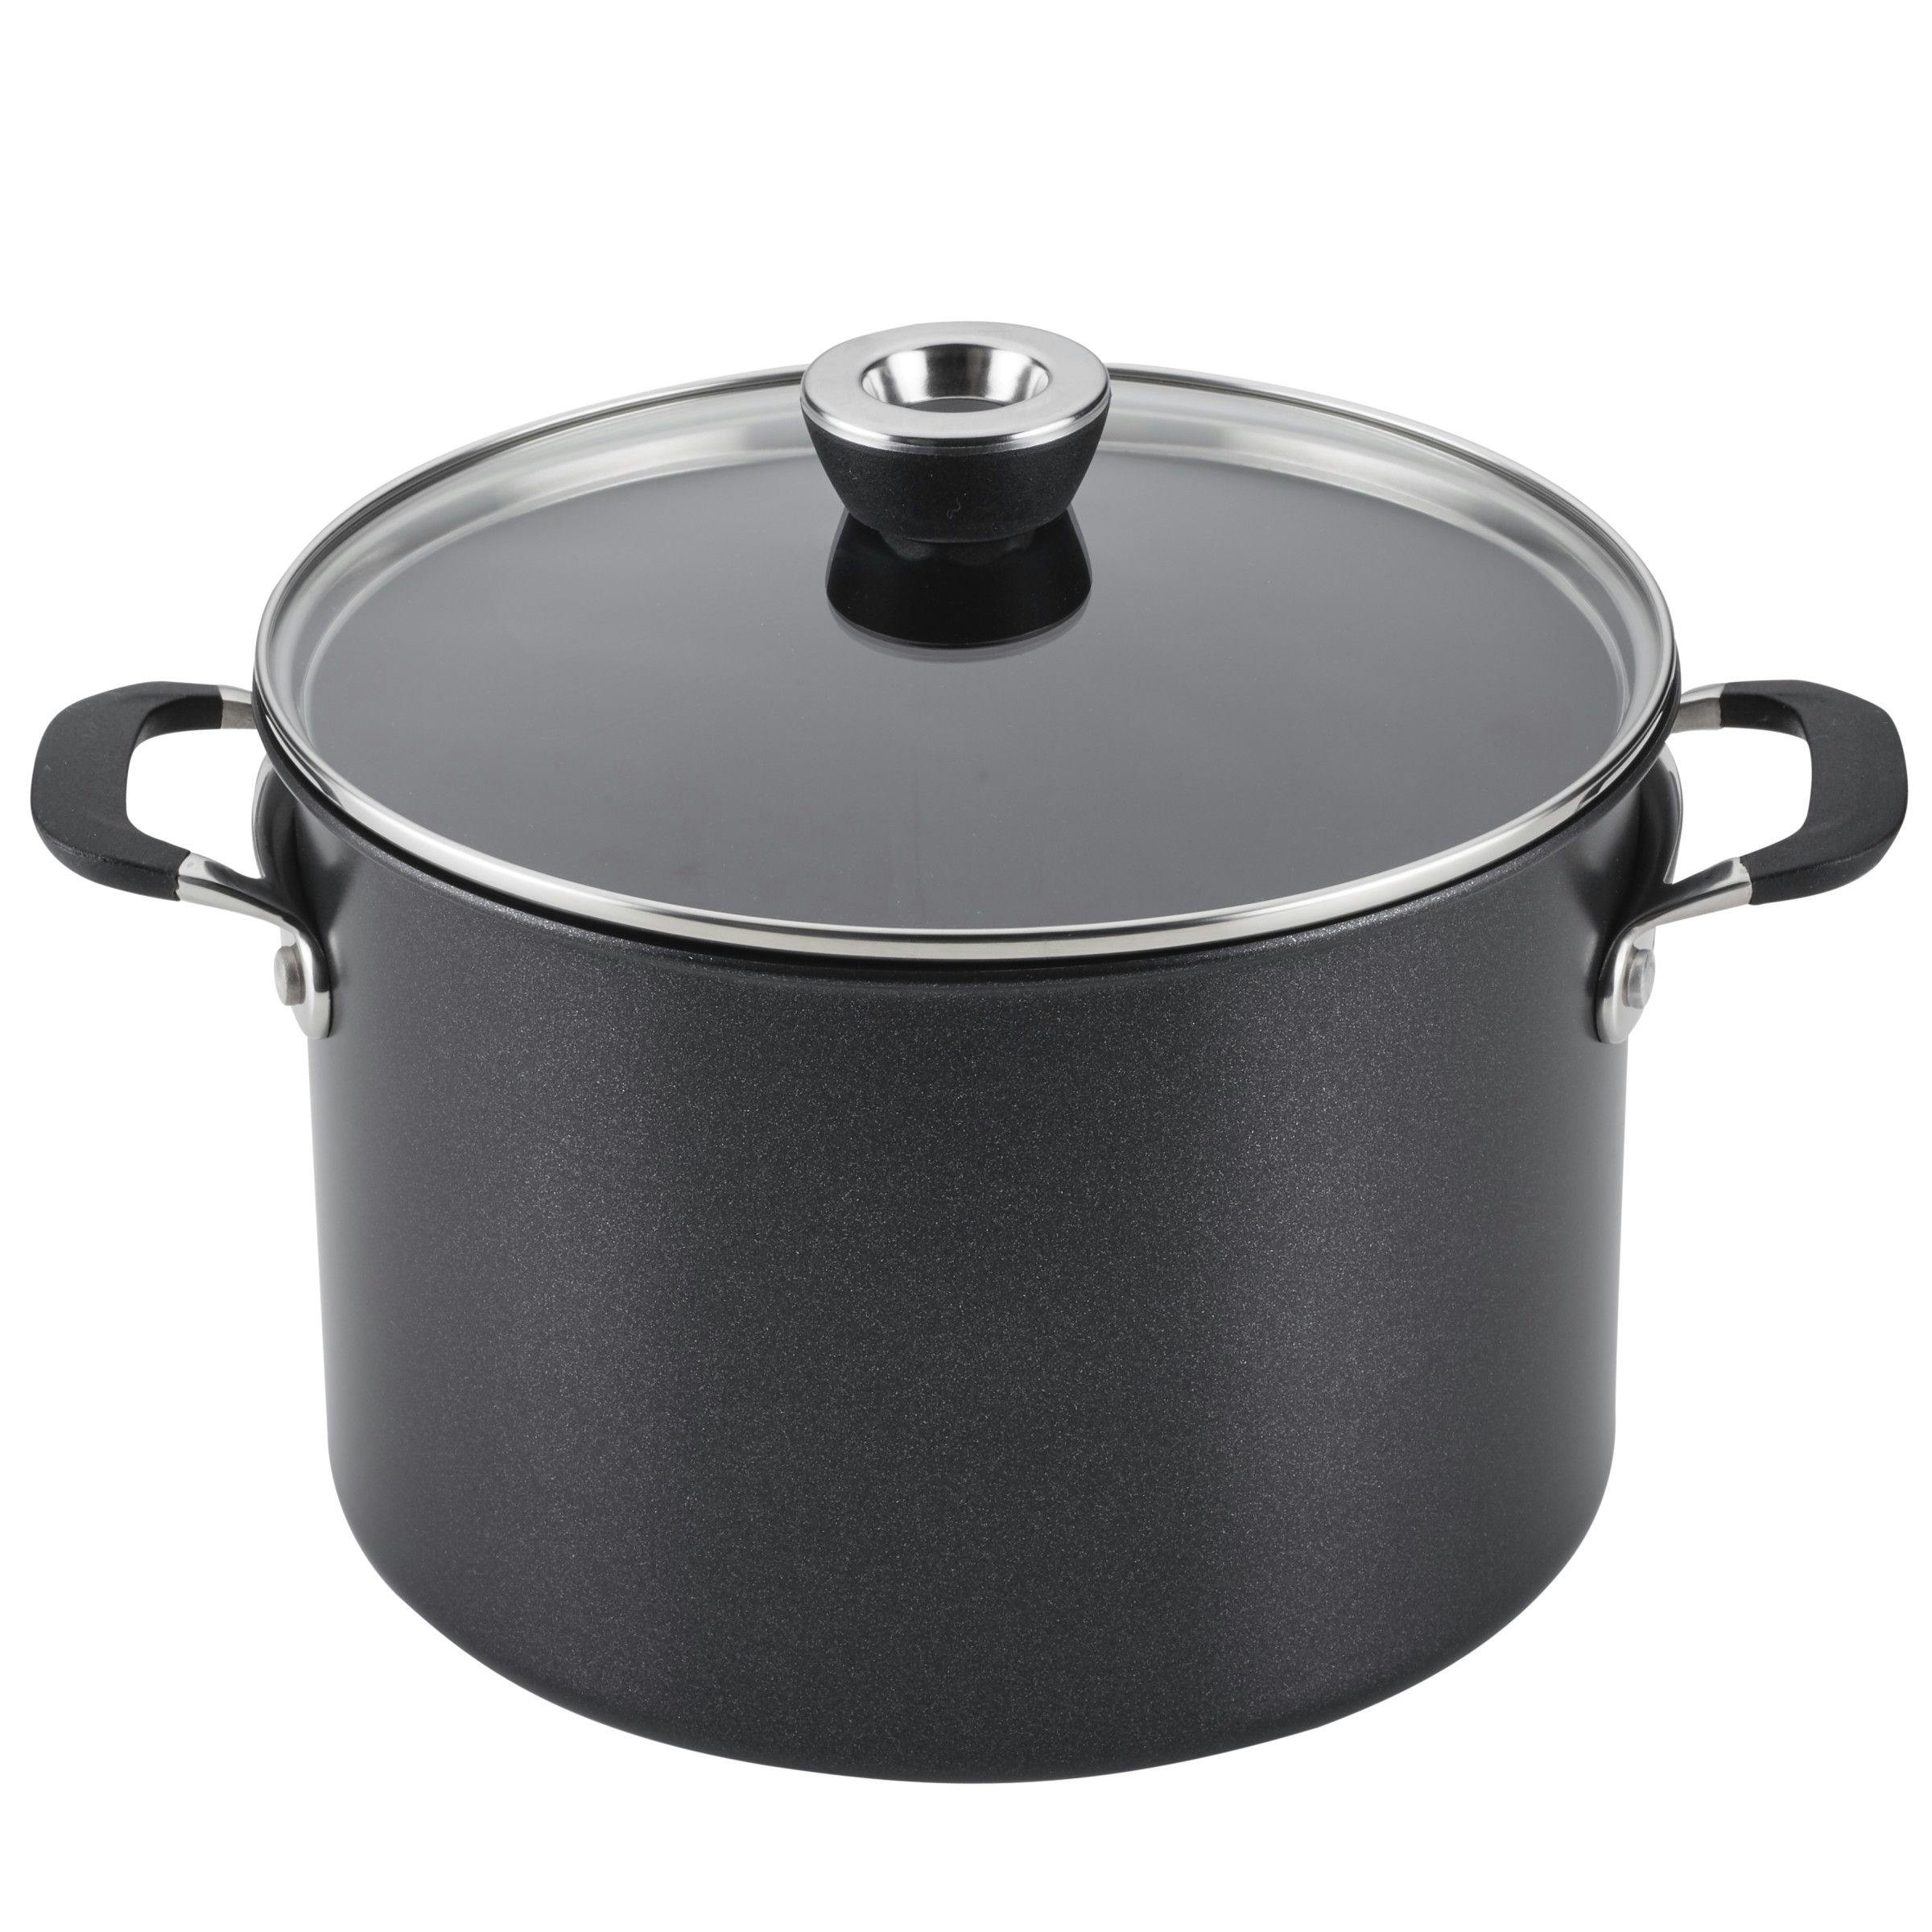 Anolon SmartStack Hard-Anodized Nonstick Cookware Induction Pots and Pans Set, 10-Piece, Black